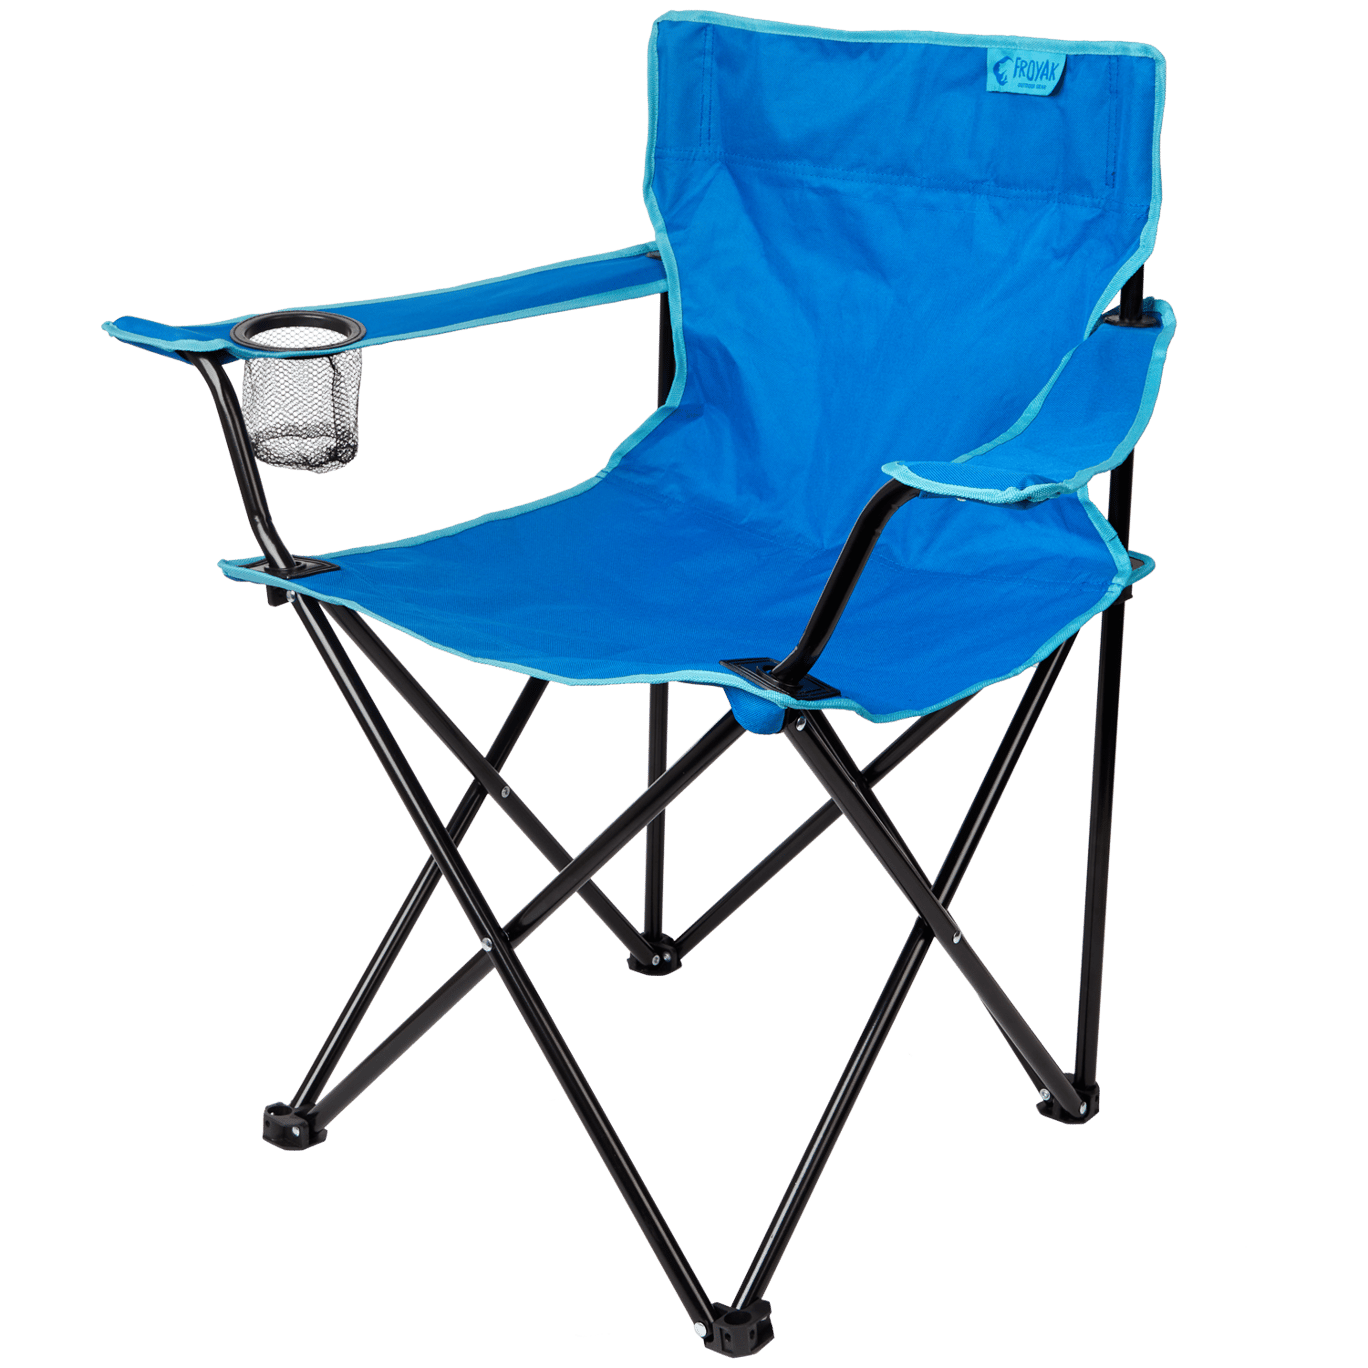 stapel Mentaliteit historisch Froyak opvouwbare campingstoel | Action.com